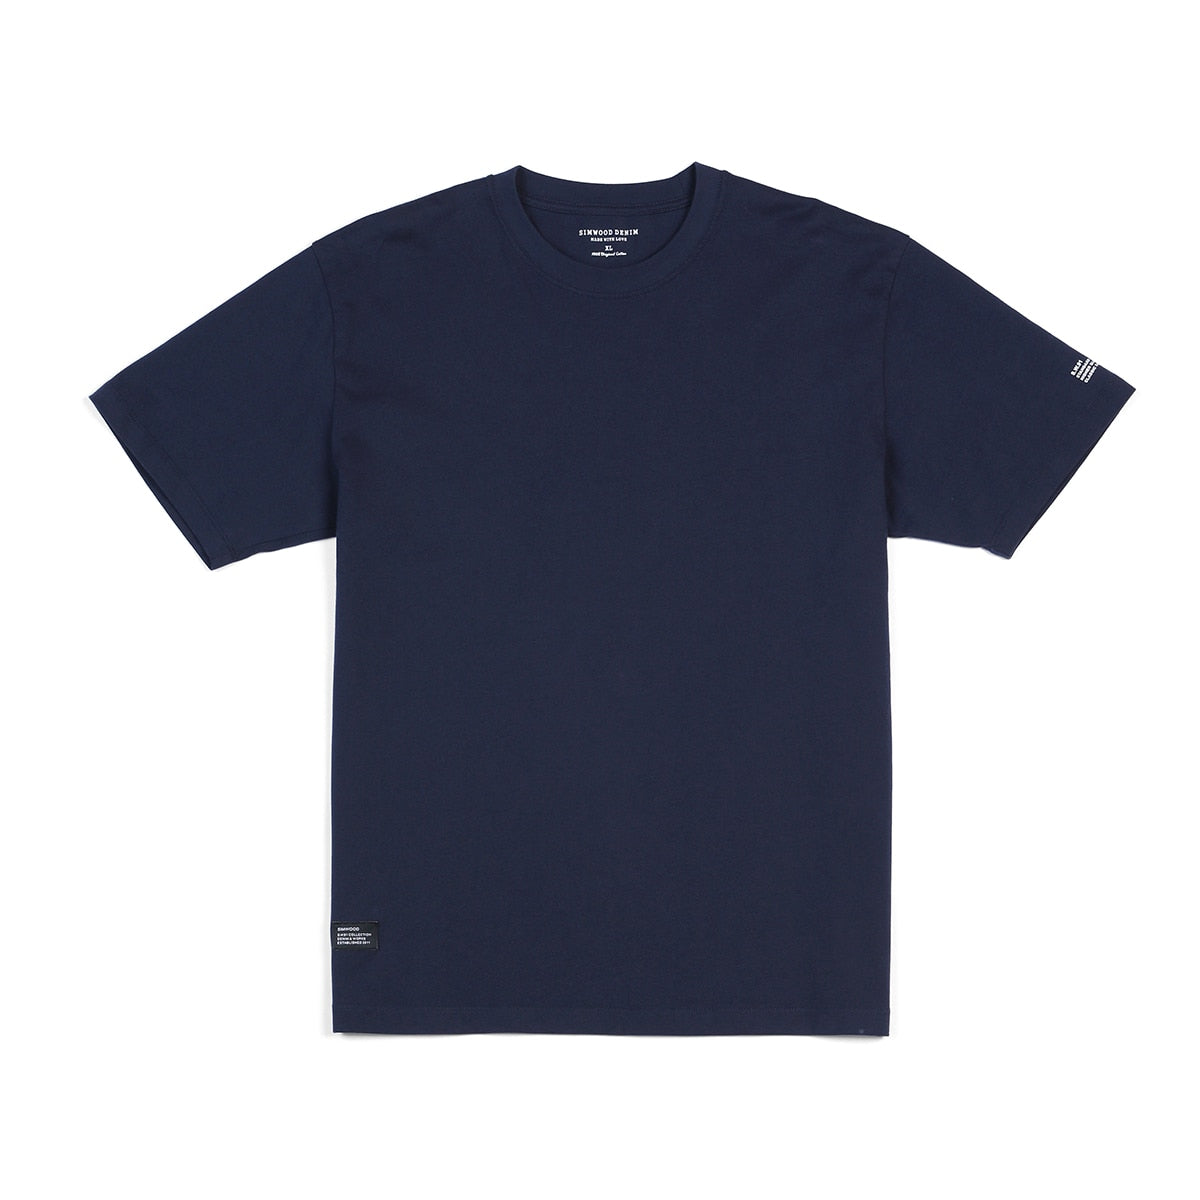 250 g 100 % Baumwollgewebe T-Shirt Männer hochwertige einfarbige Tropfenhülse lose T-Shirts Oversize-Oberteile